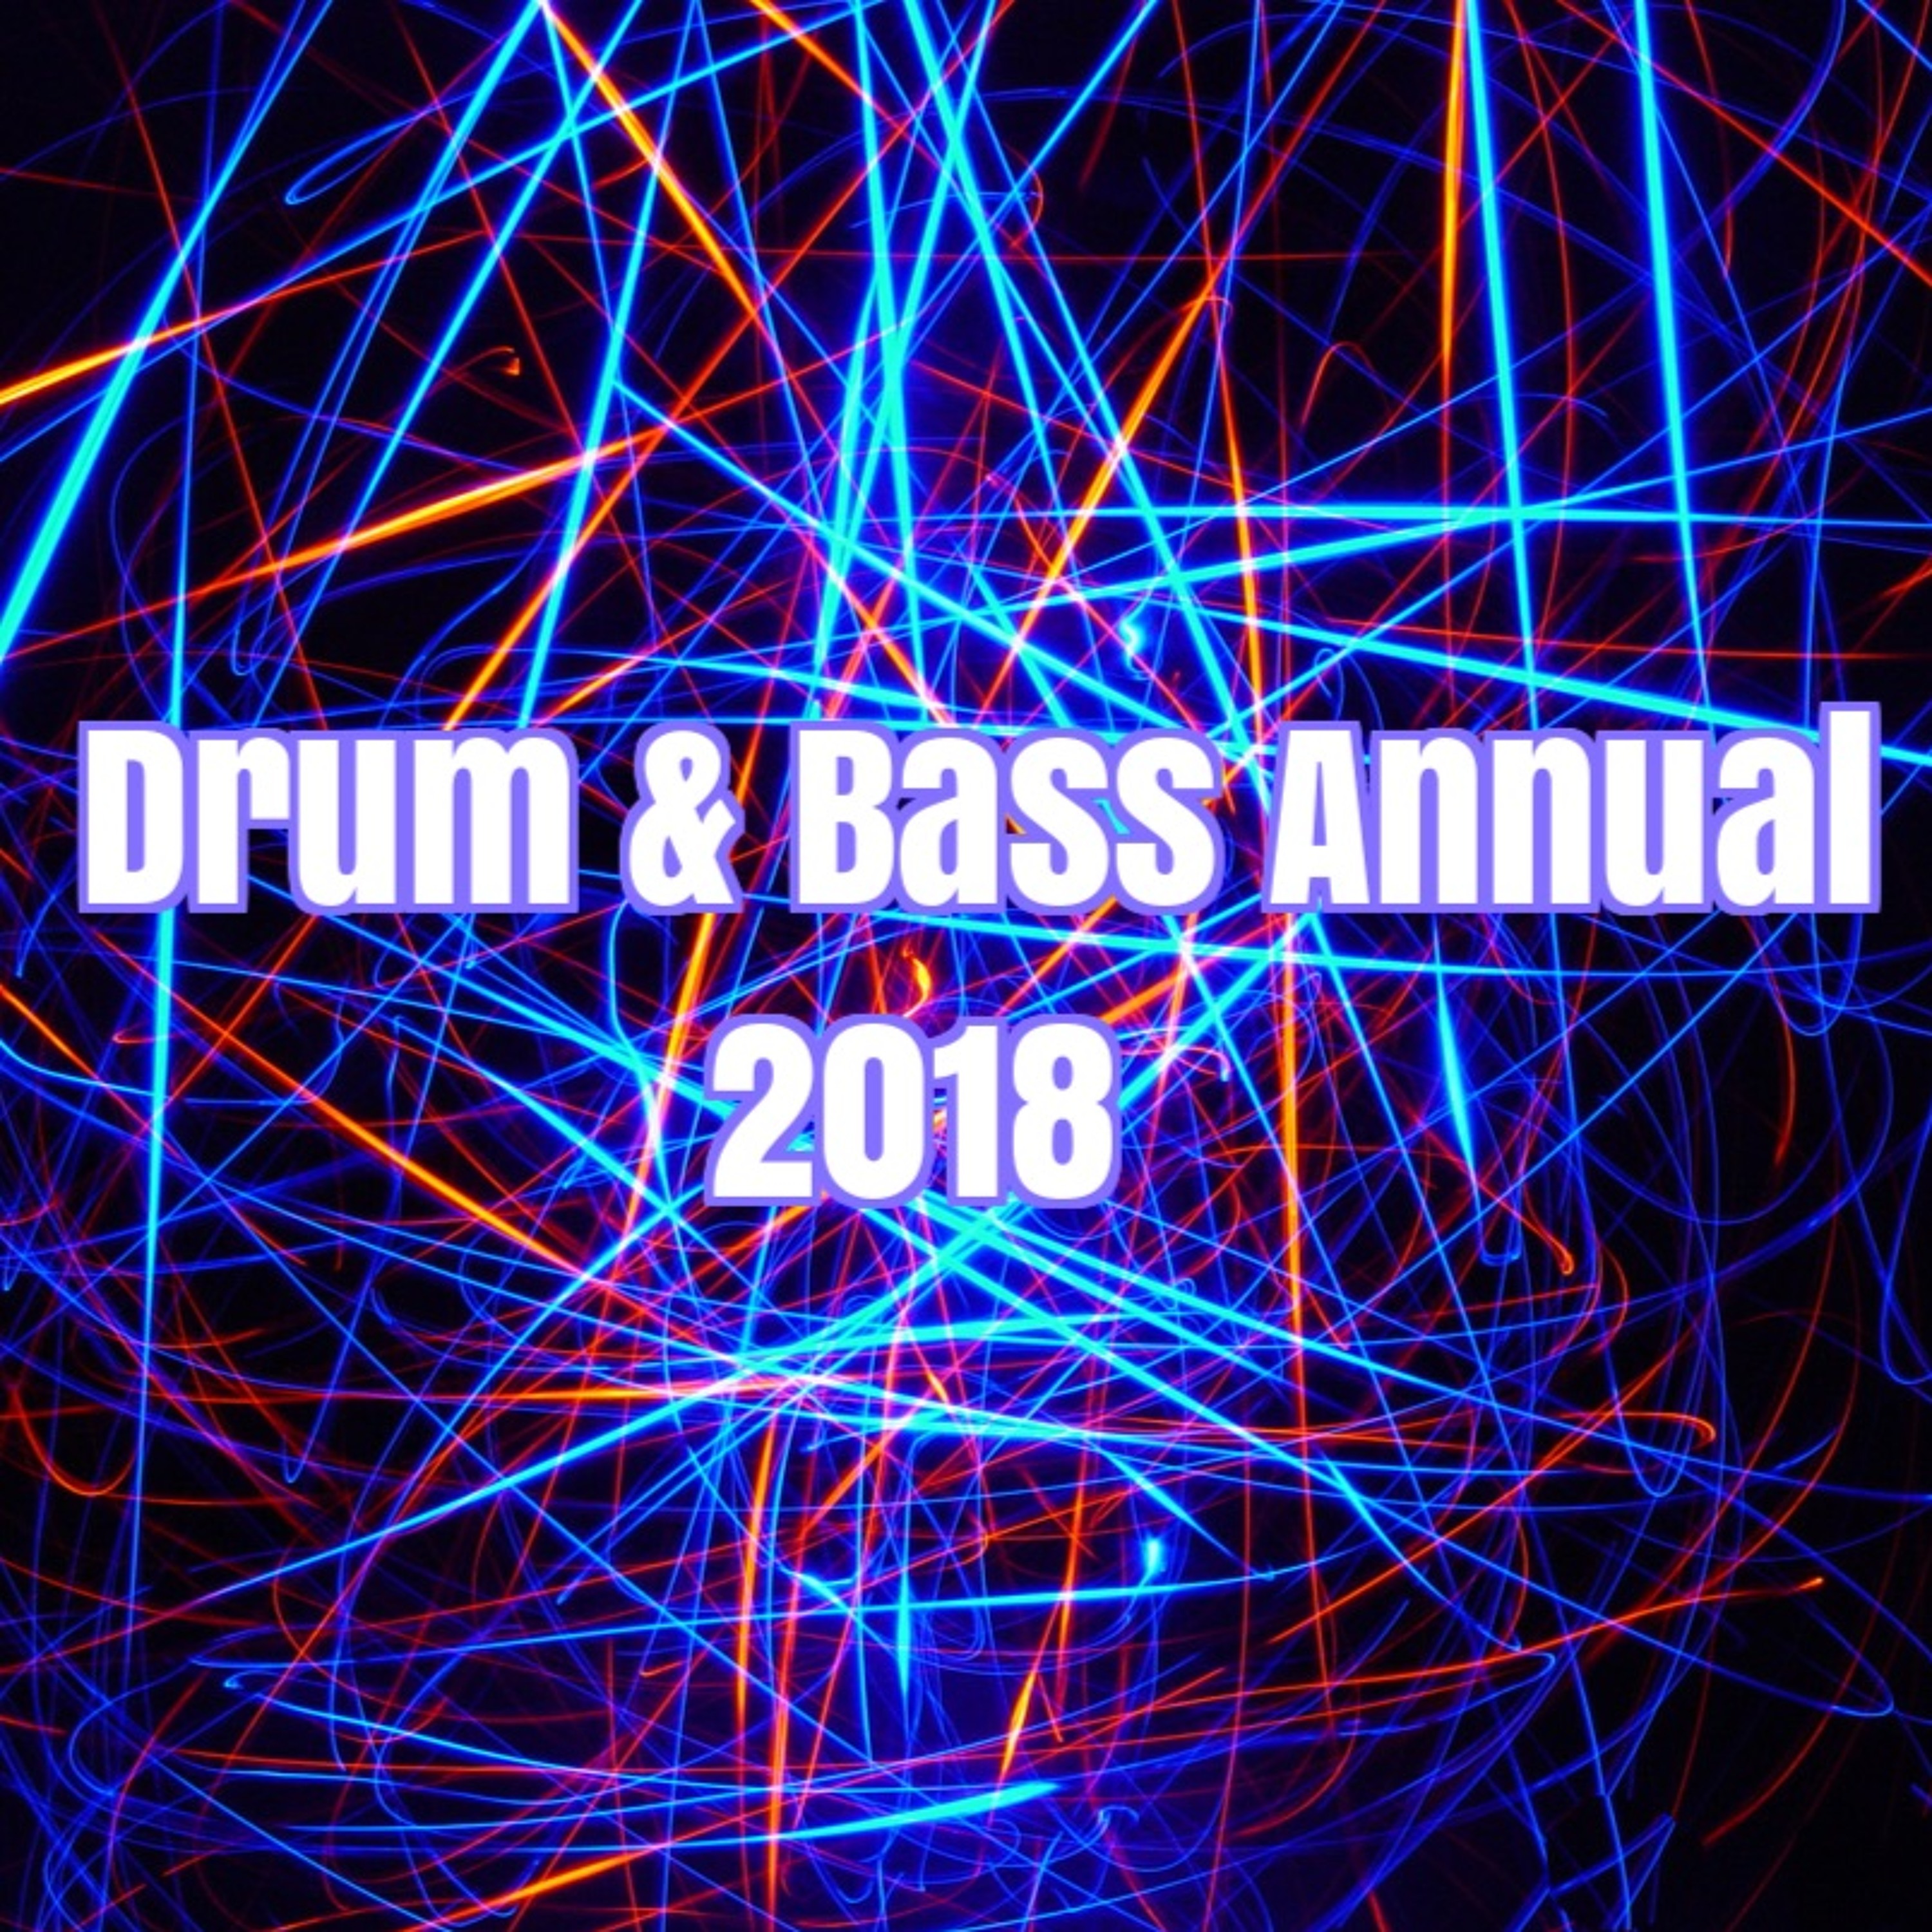 Drum & Bass Annual 2018 - Ft. Noisia, Cyantific, Break, Upgrade, Turno, Benny L, Document One, 1991 Artwork